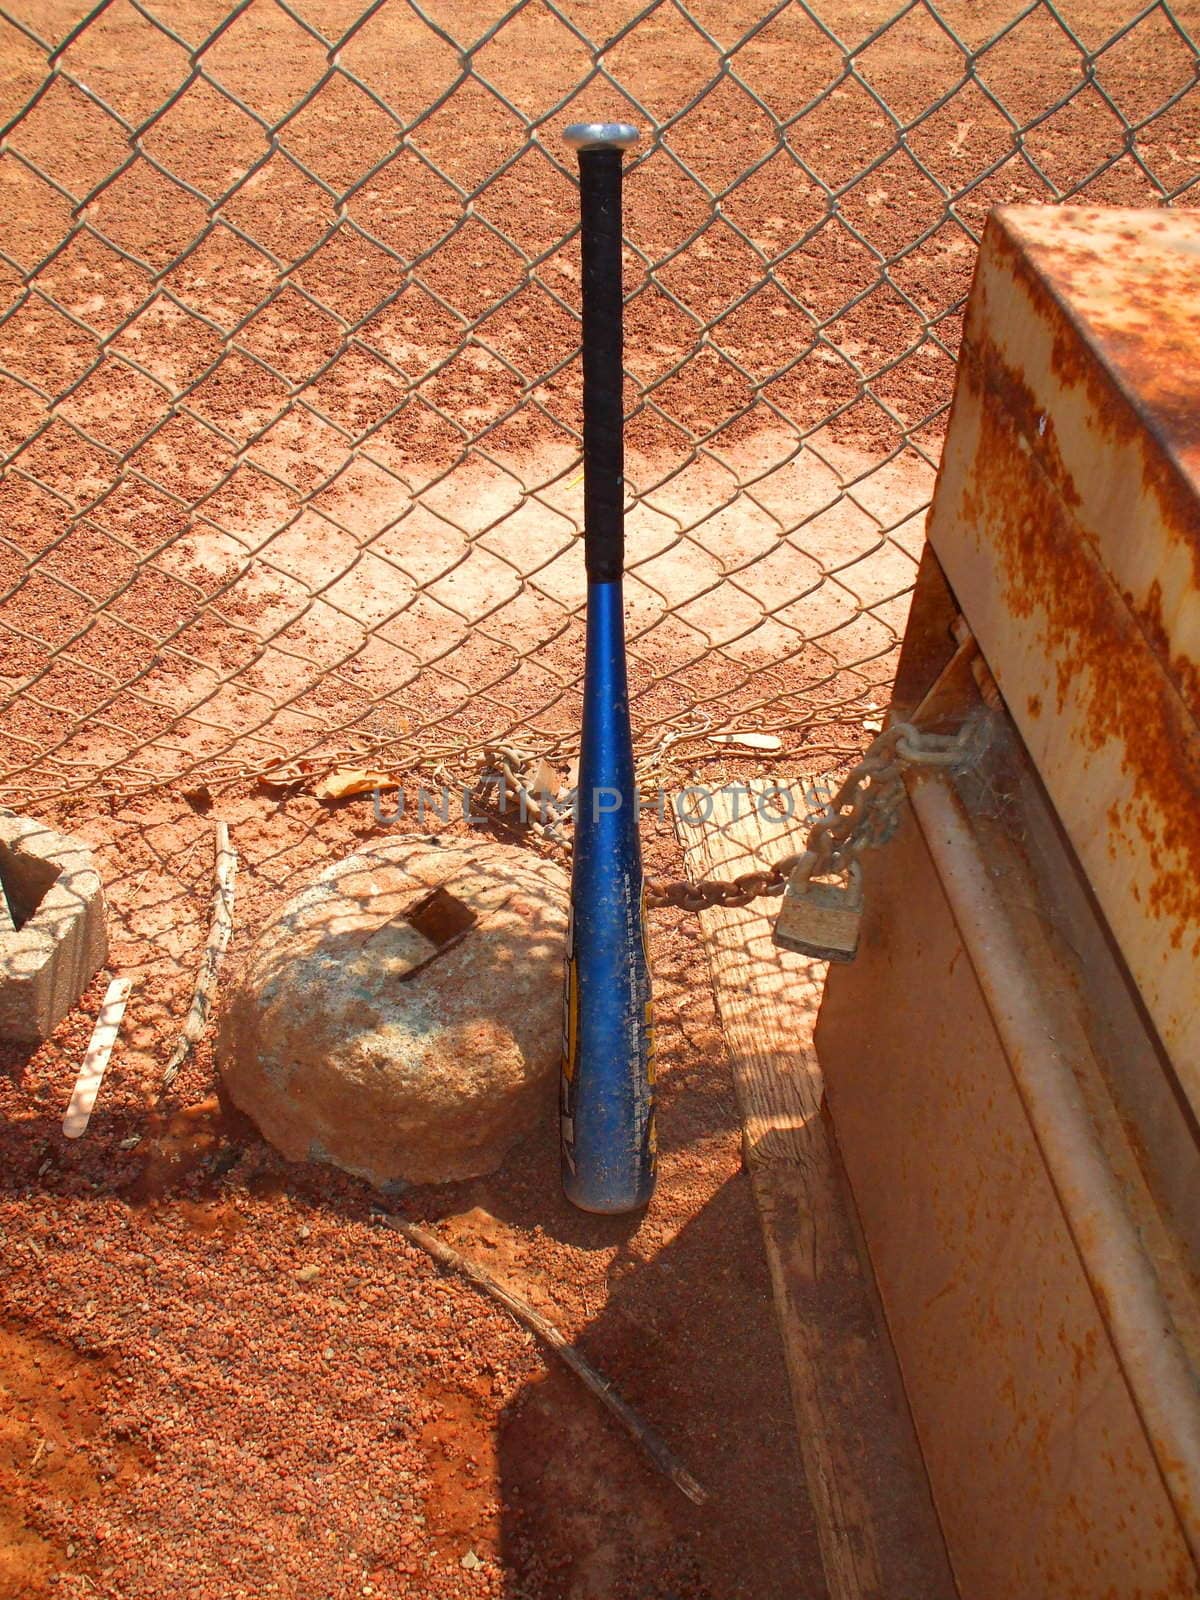 Baseball bat next to a fence.